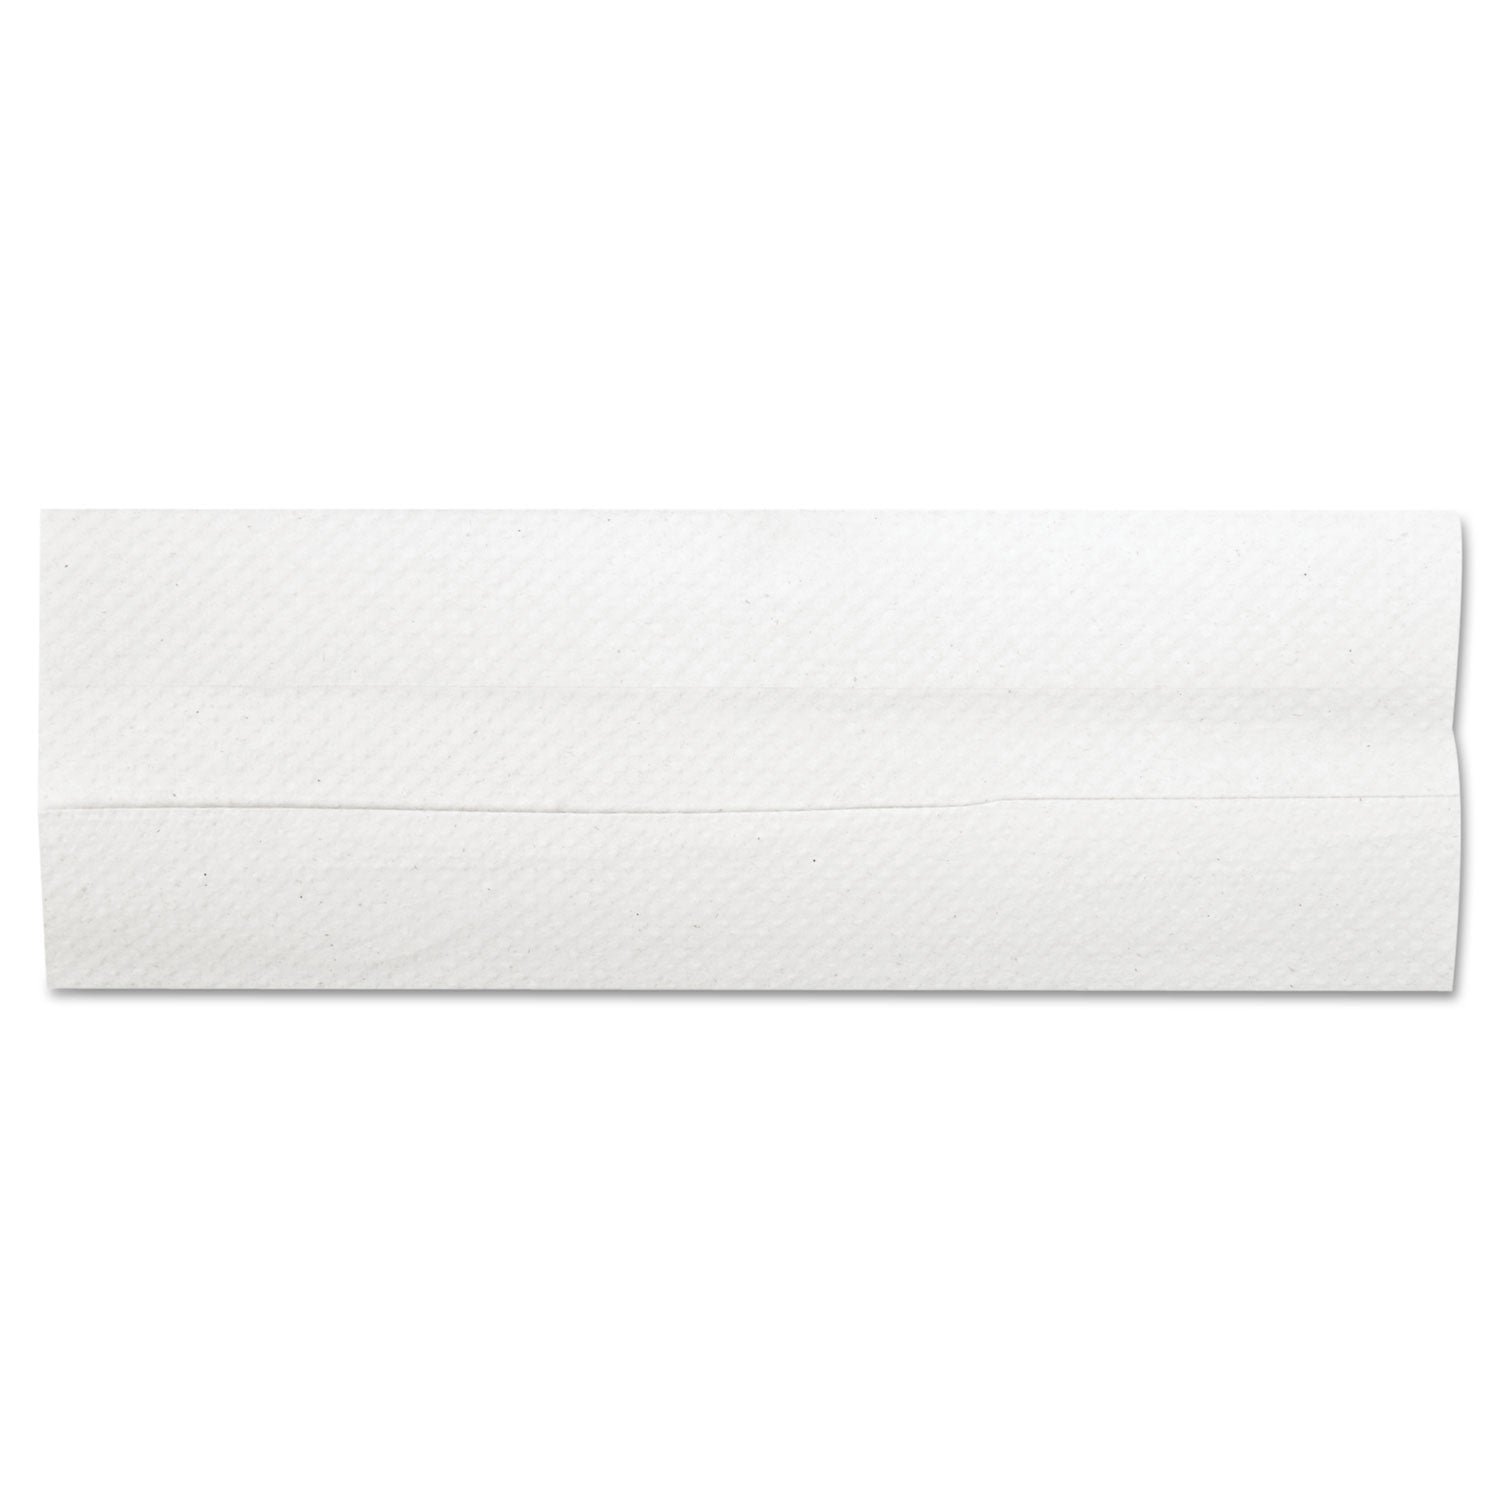 c-fold-towels-1-ply-11-x-1013-white-200-pack-12-packs-carton_gen1510b - 1